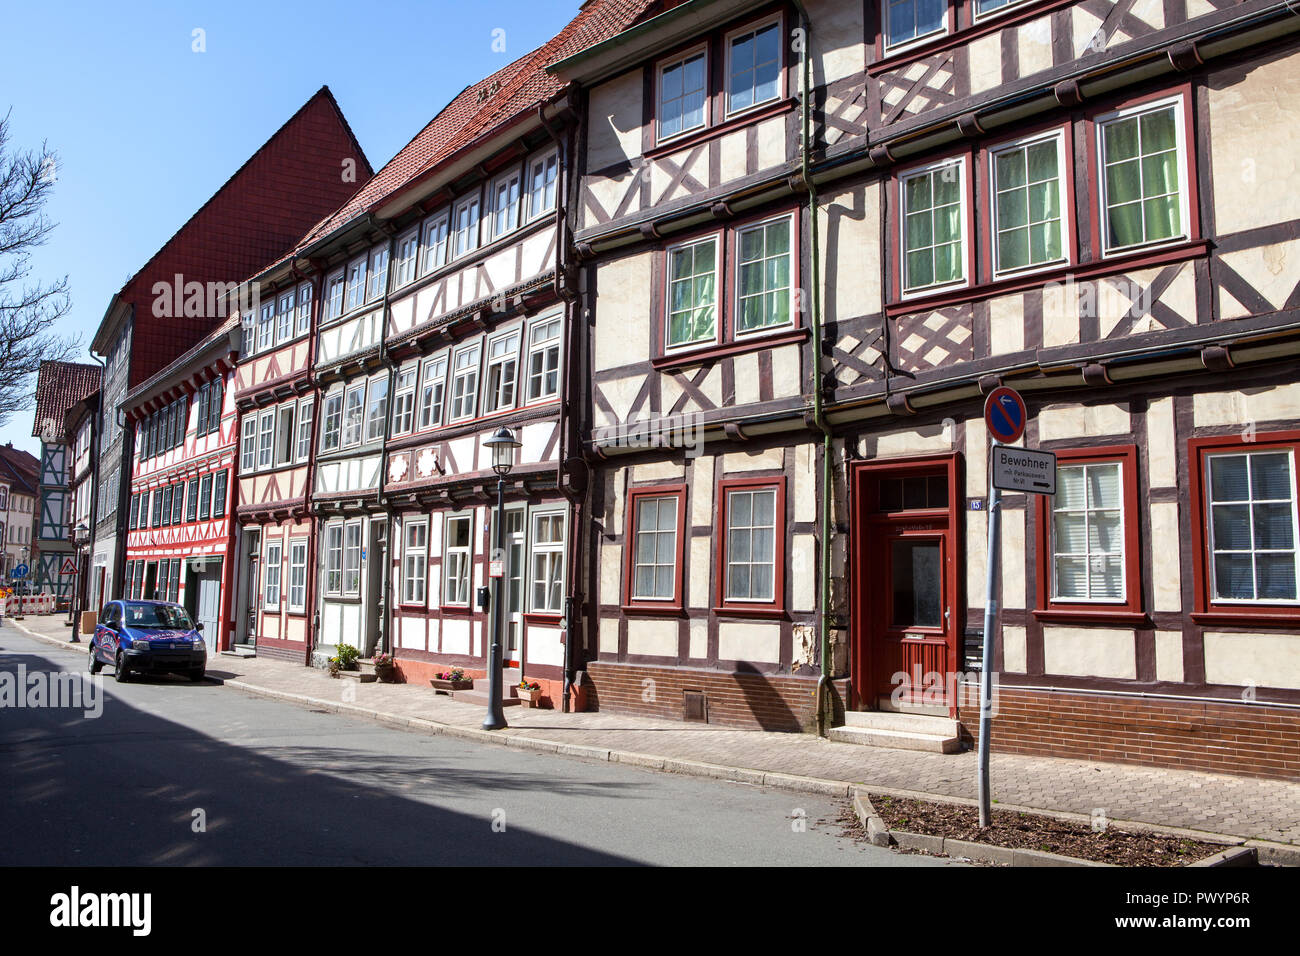 Maisons à colombages, Duderstadt, Basse-Saxe, Allemagne, Europe Banque D'Images